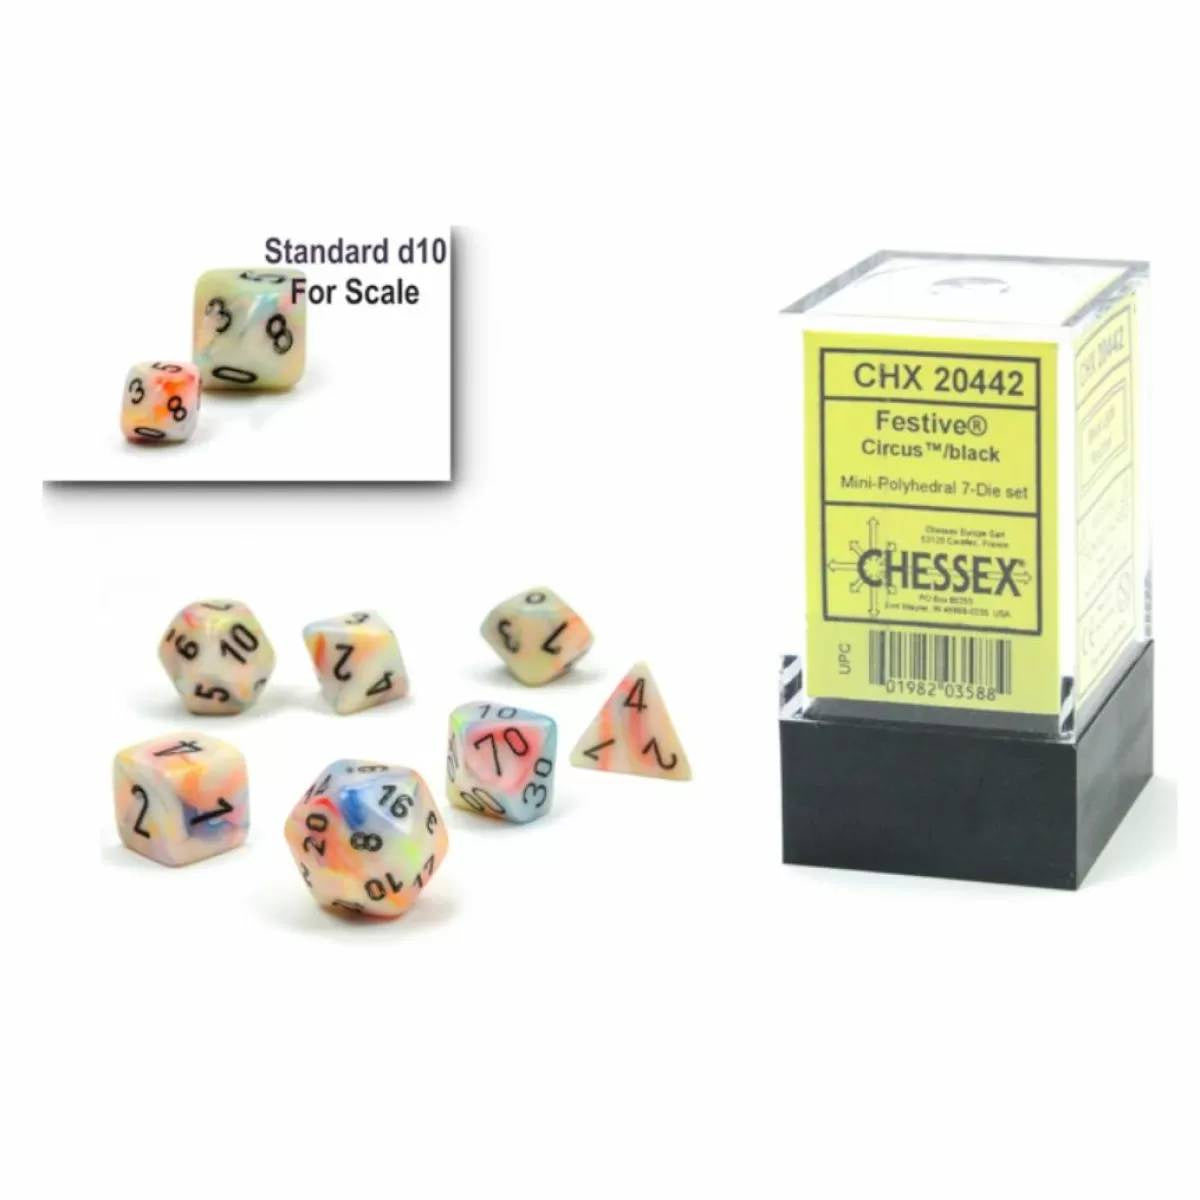 Chessex - Festive Mini Circus/Black 7-Die Set (CHX 20442)